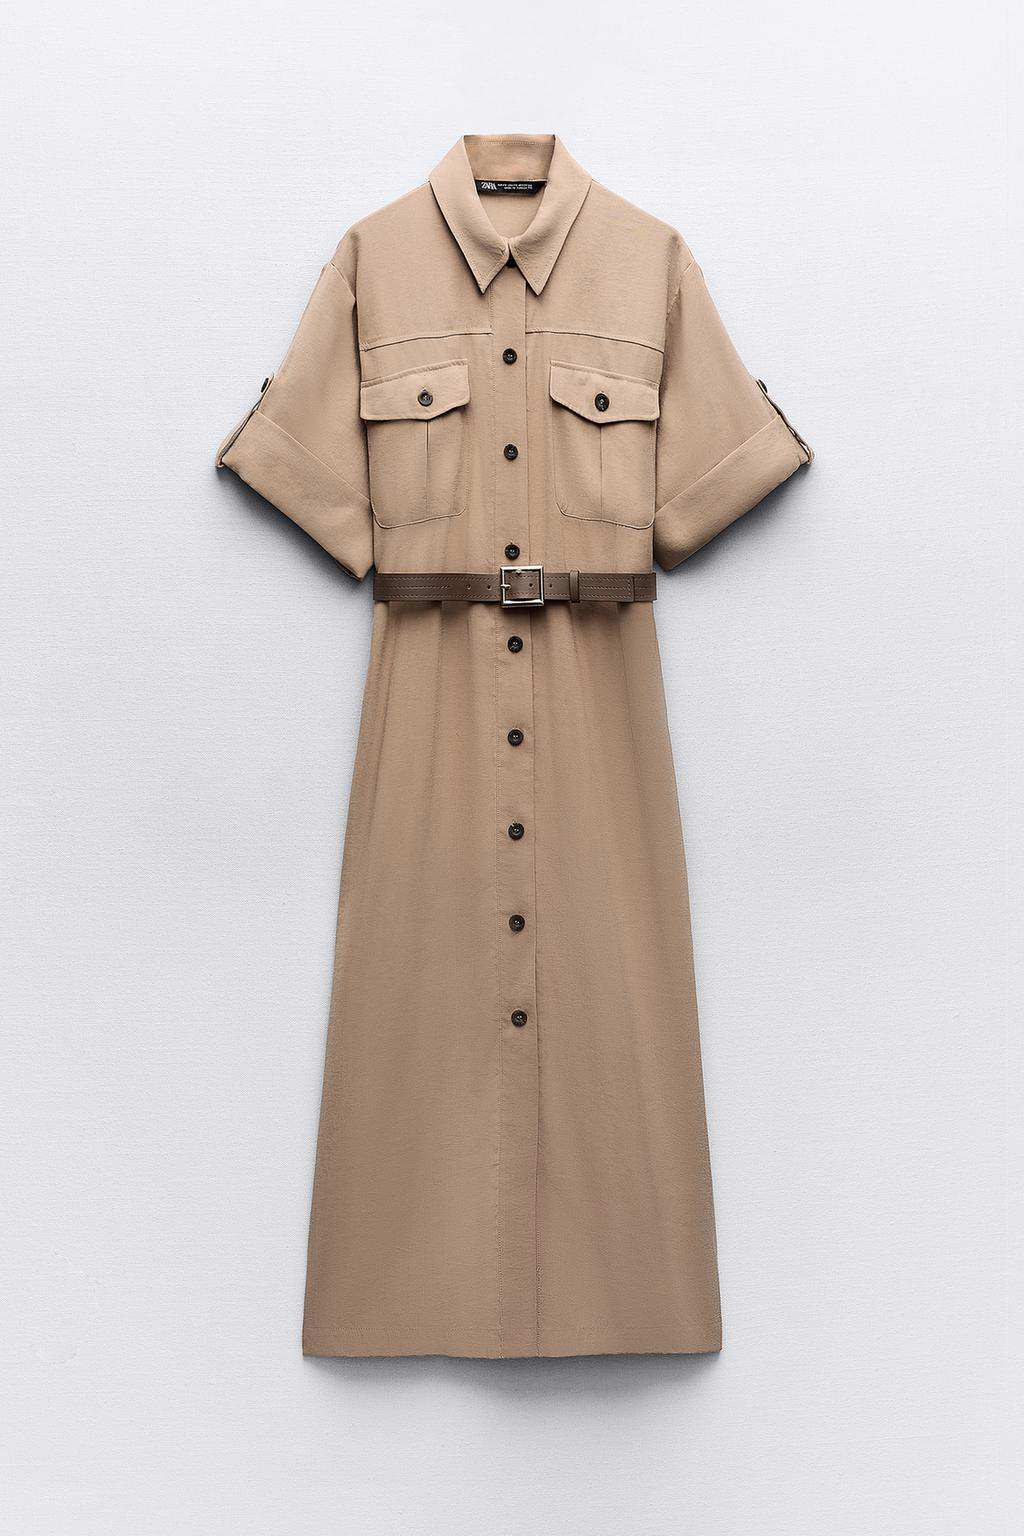 Vestido camisero cinturo´n de Zara 45,95 euros